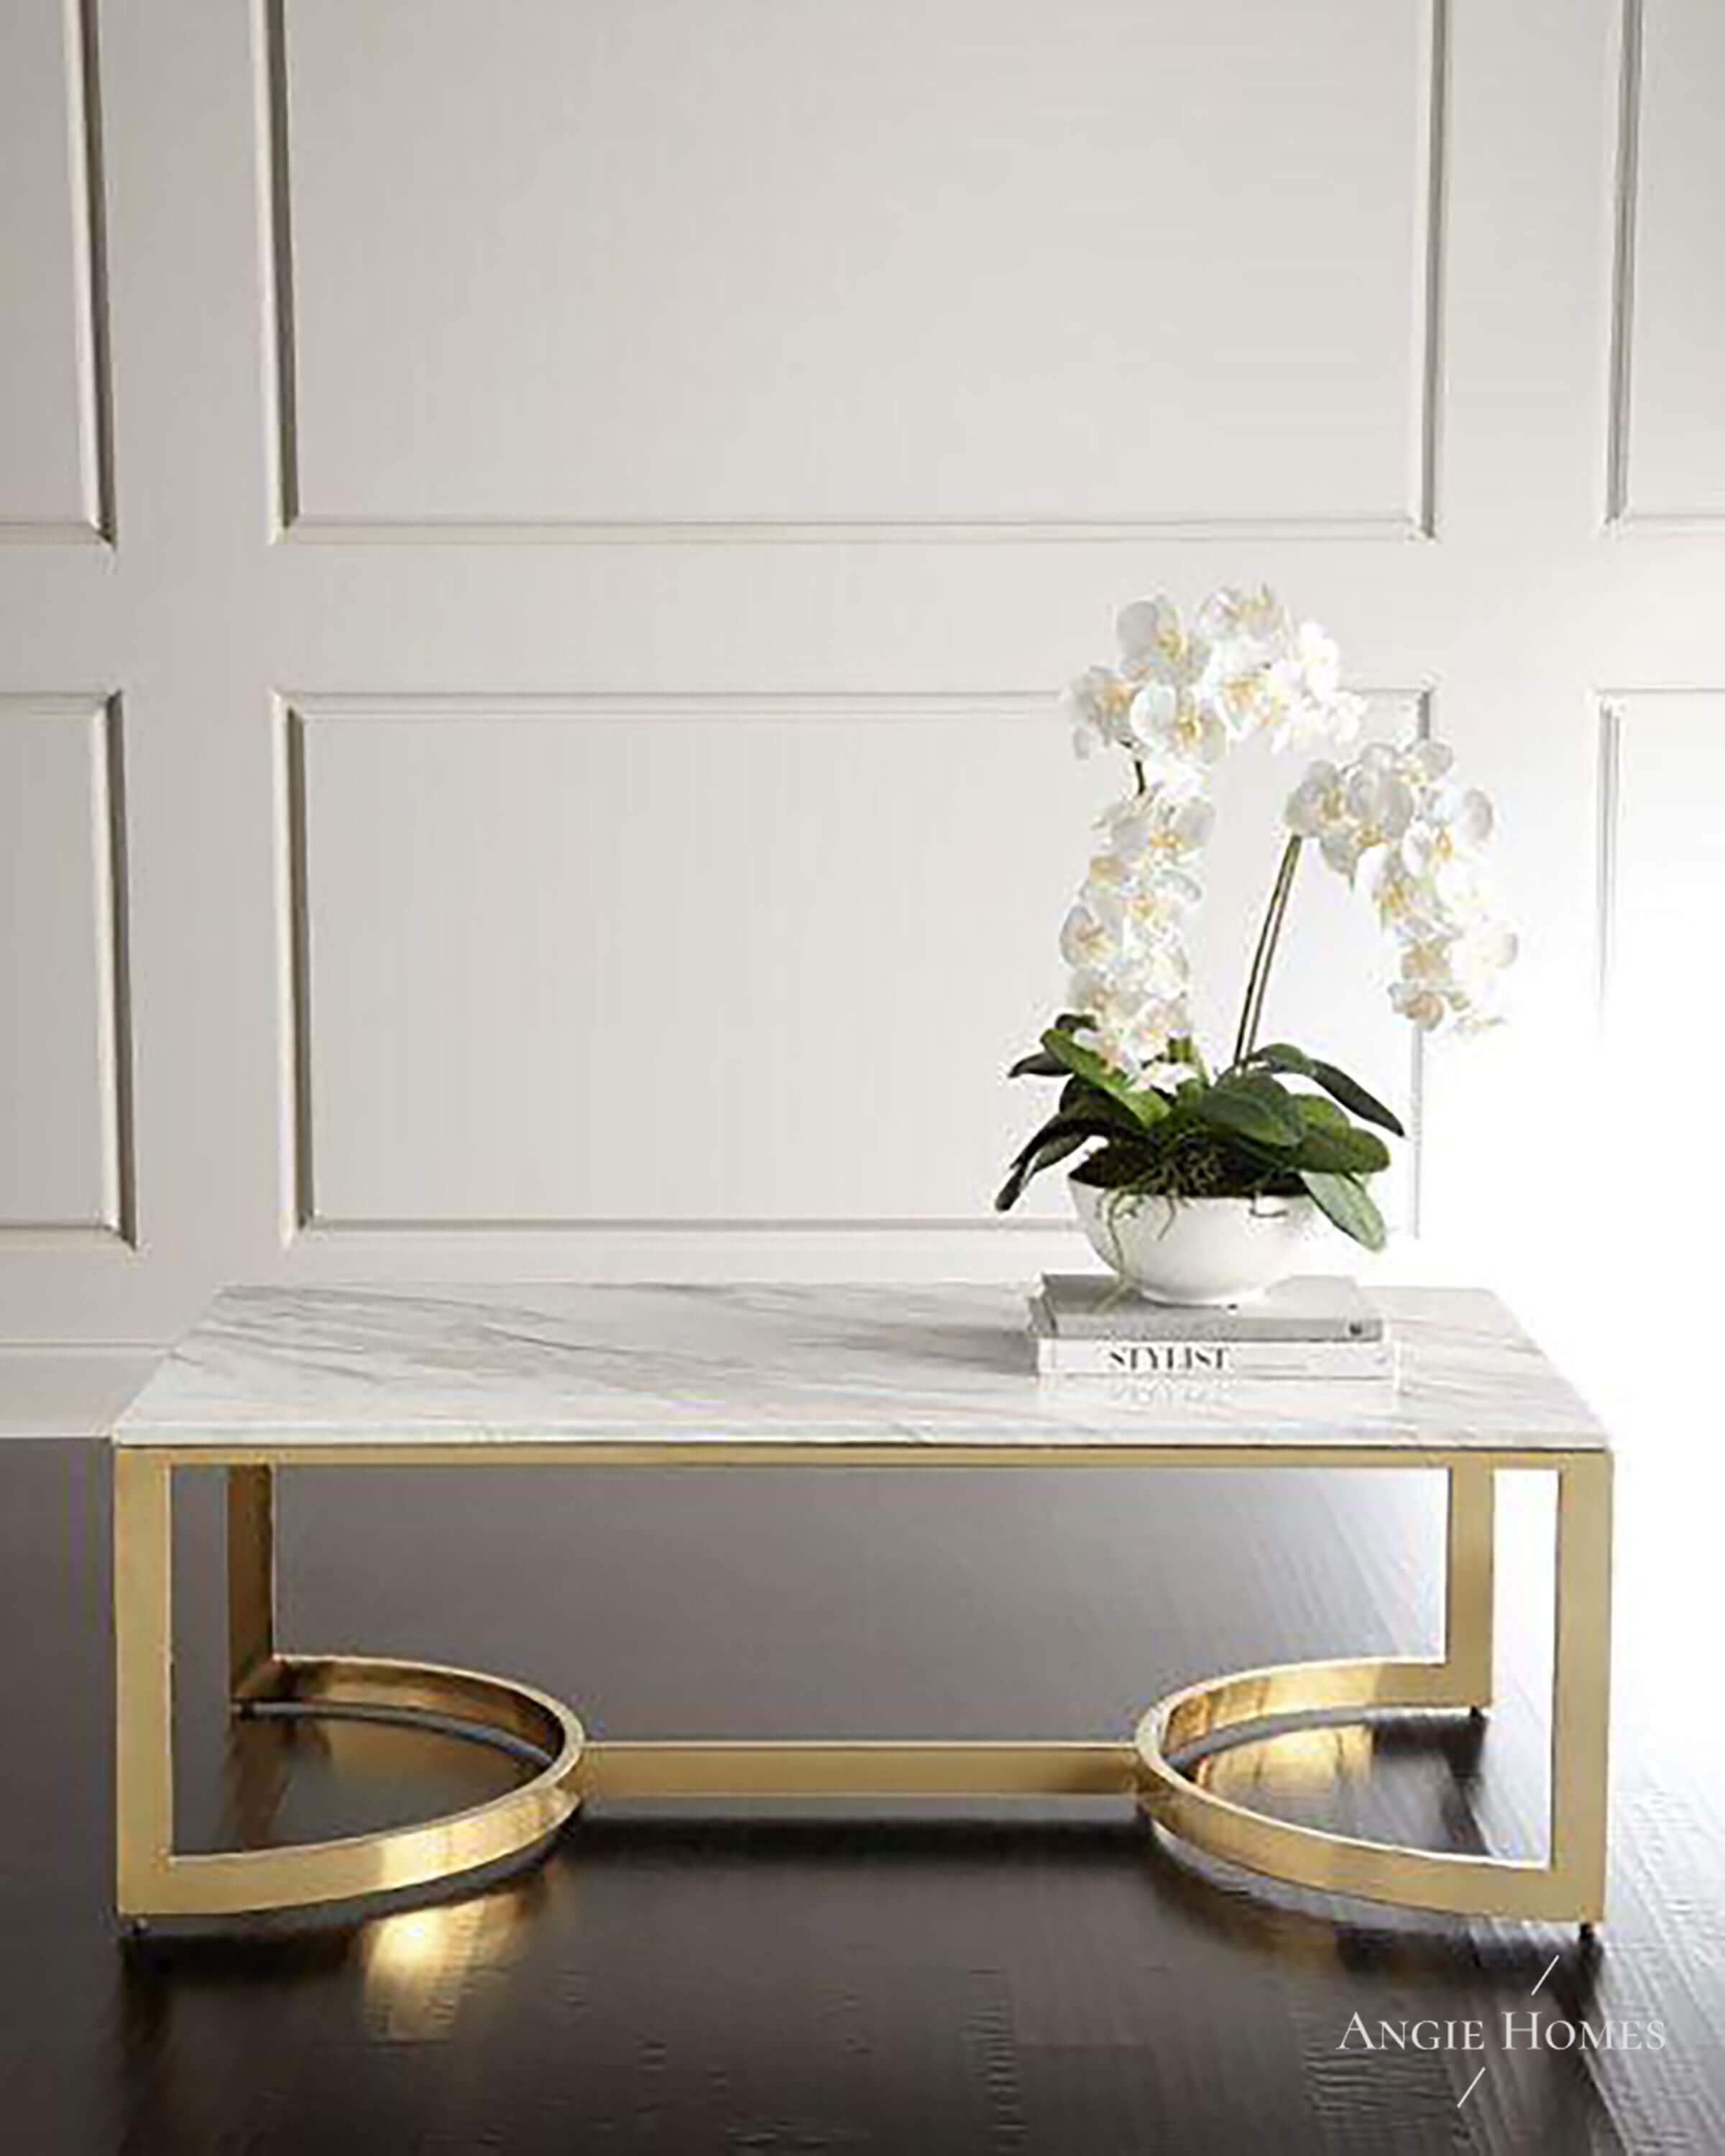 Luxury Gold Metal Table